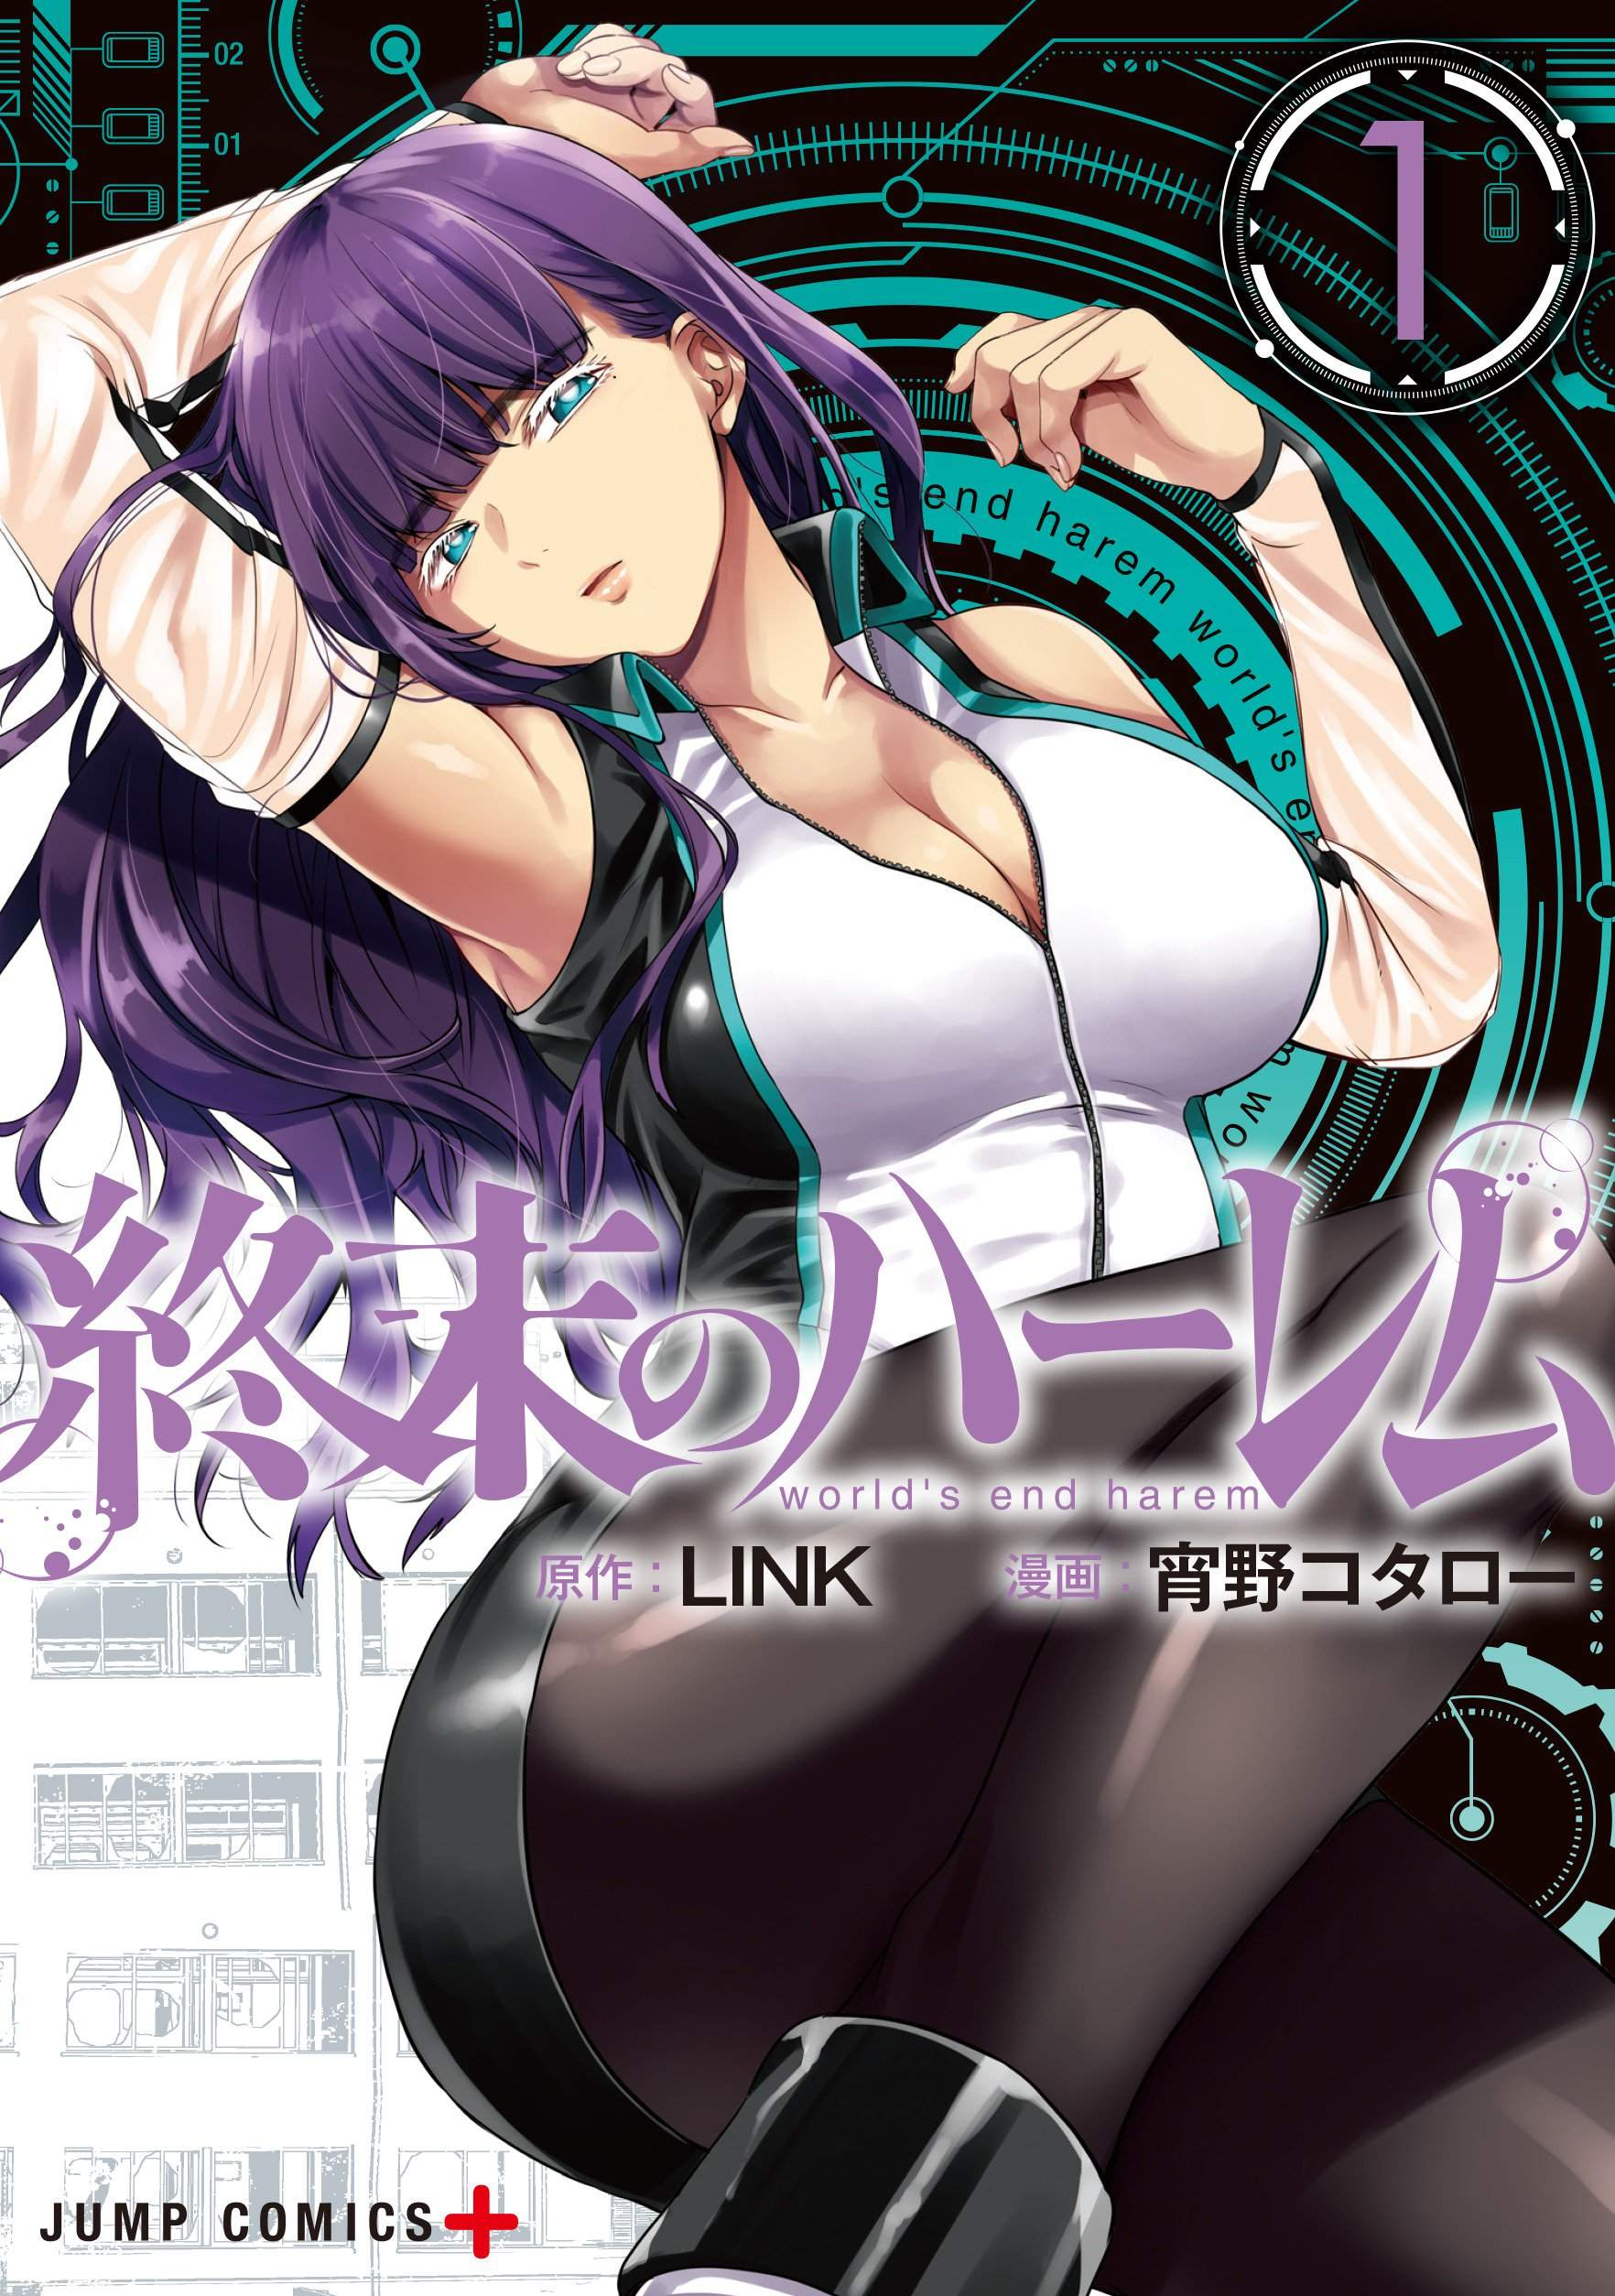 Worlds-End-Harem-manga-copies-volume-1-cover